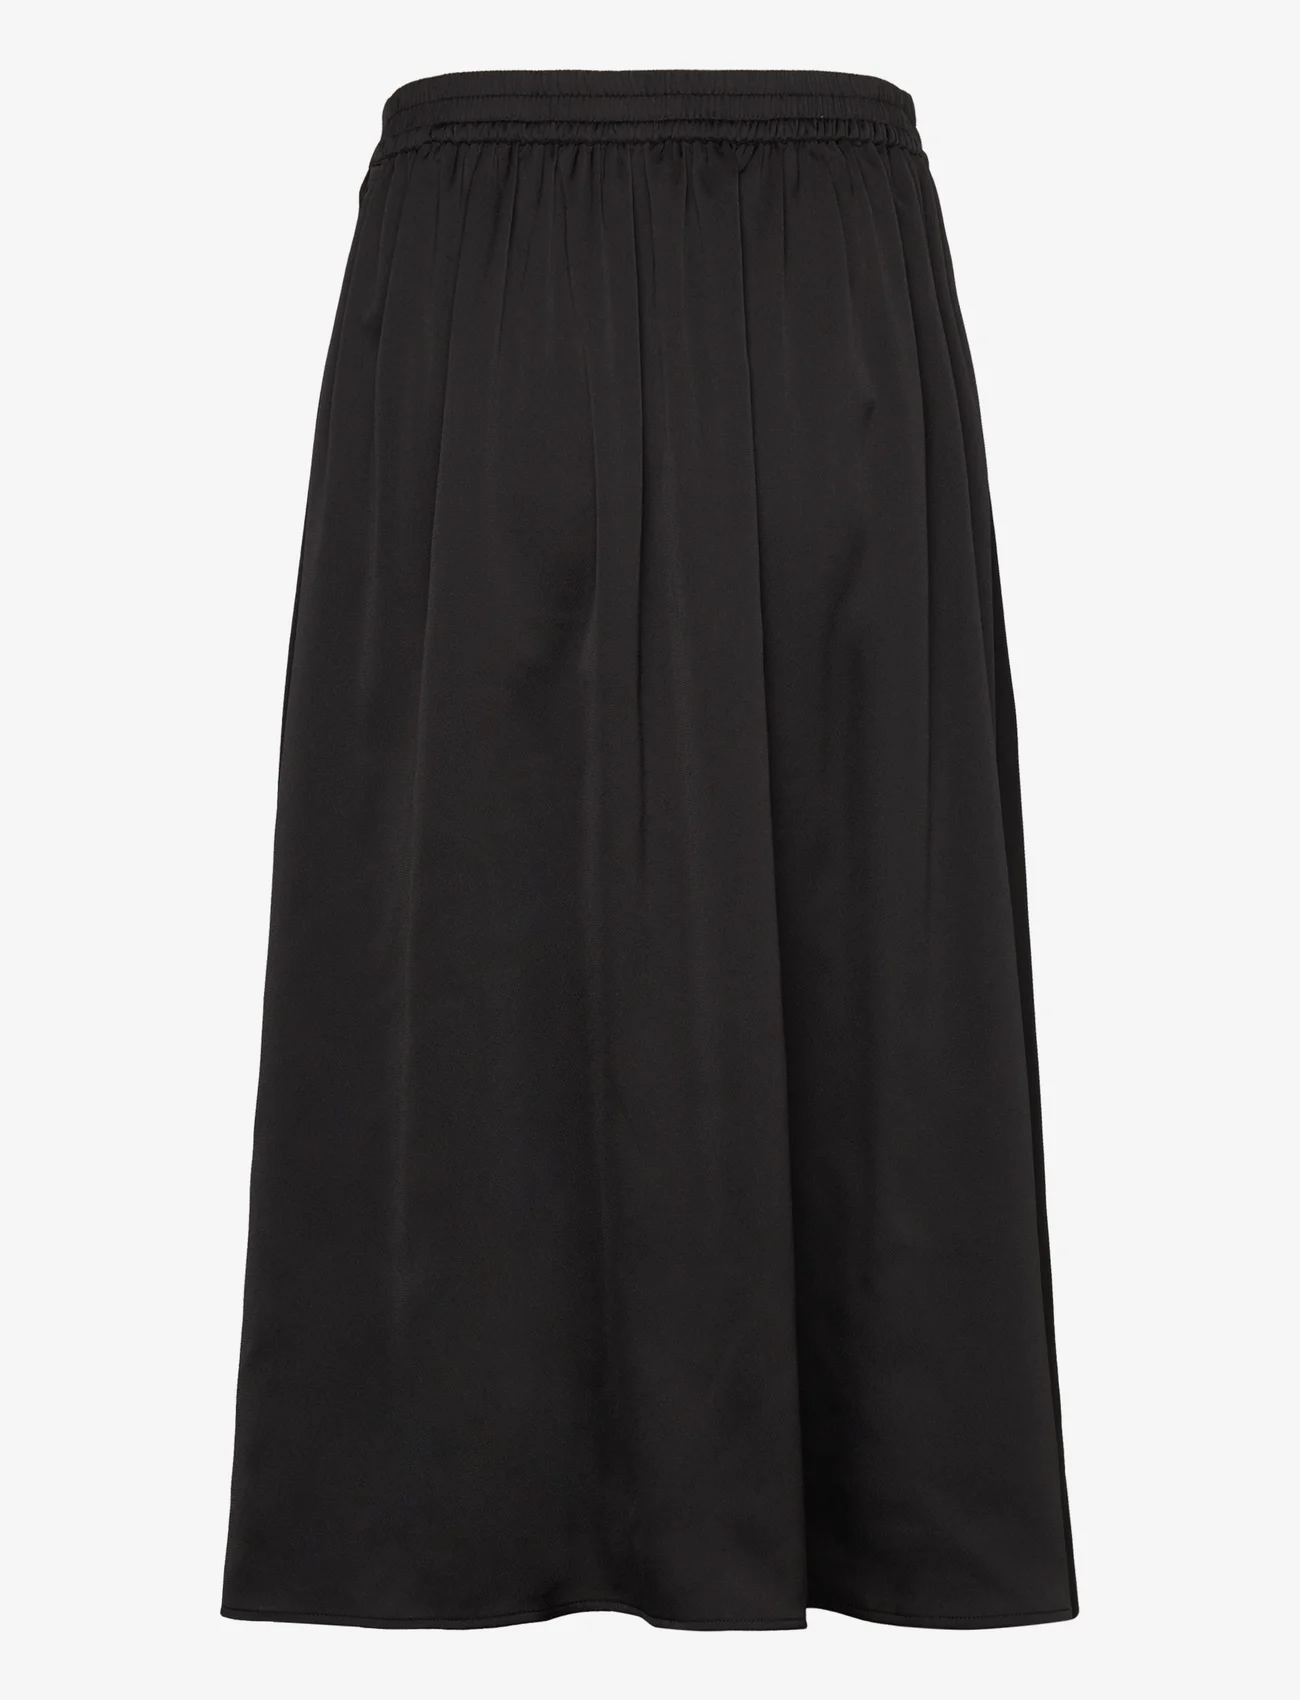 Bruuns Bazaar - AcaciaBBAmattas skirt - midi skirts - black - 1